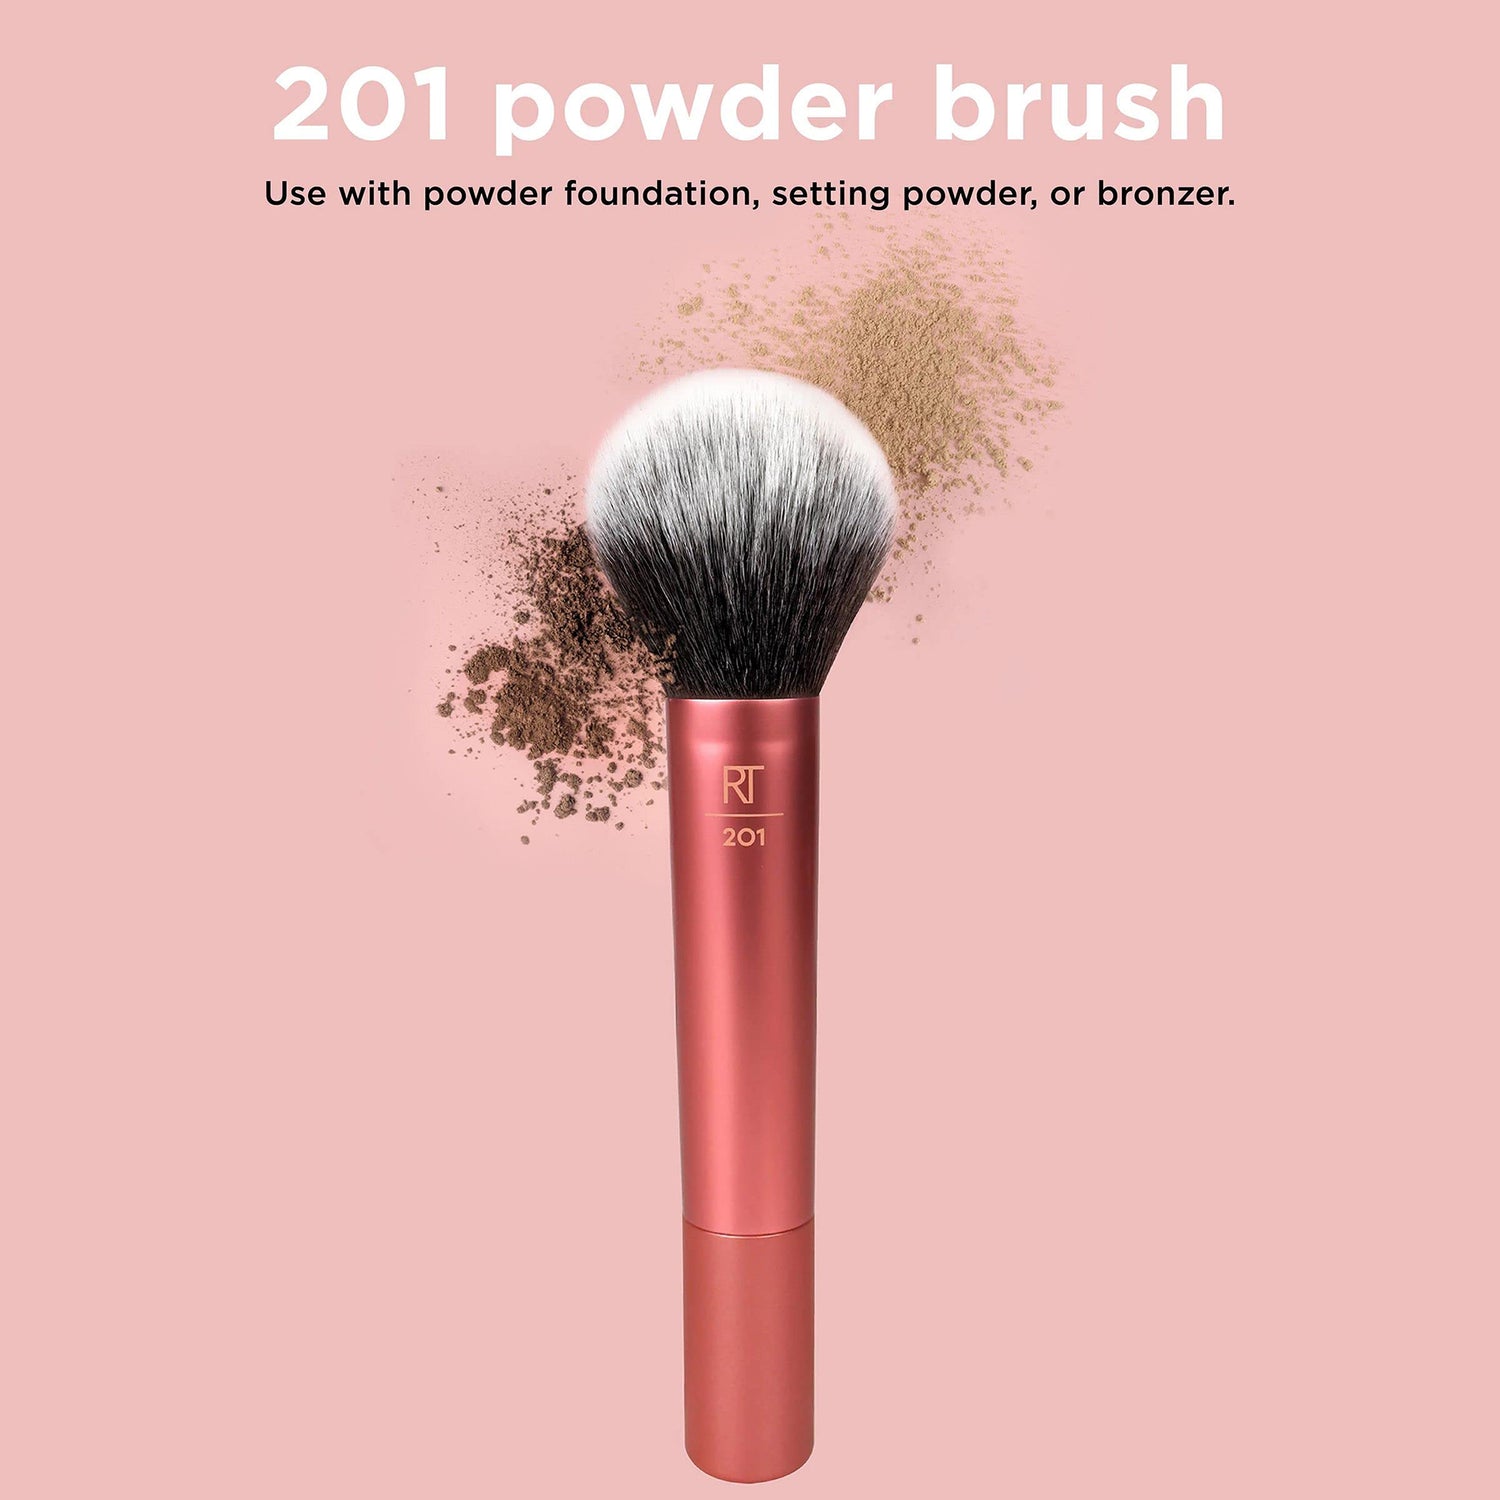 Powder Brush